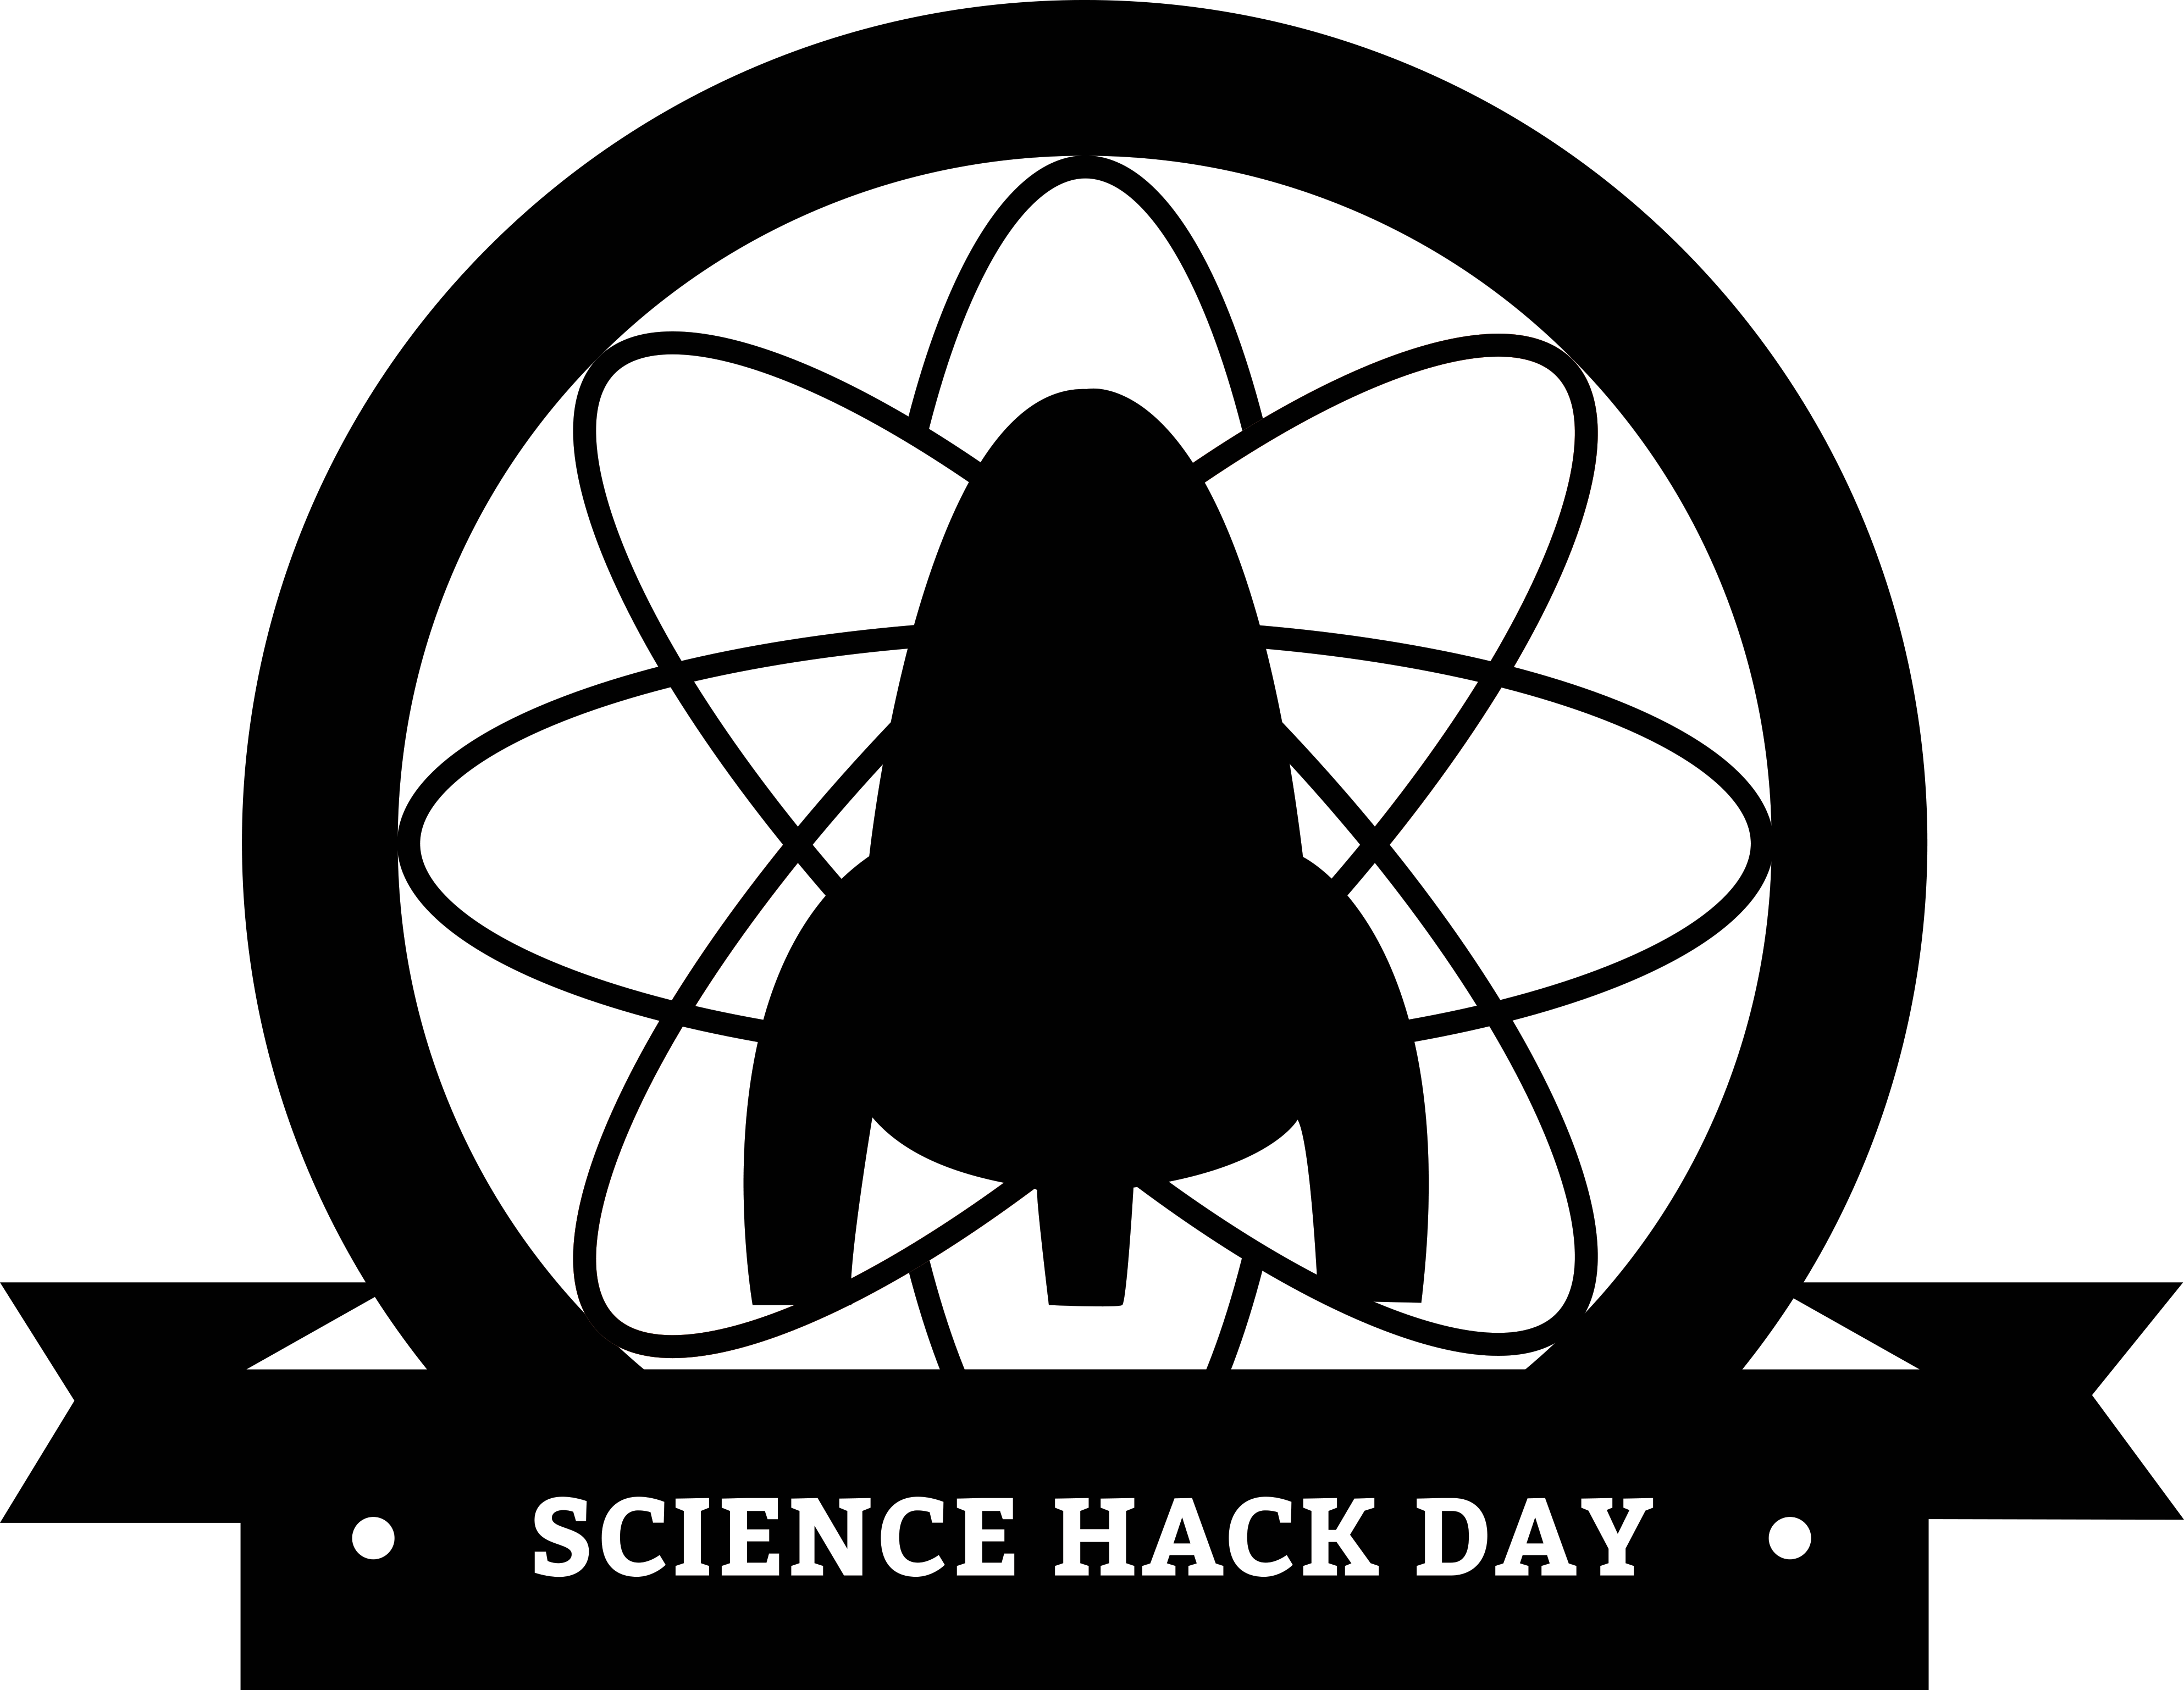 Hacking Logo - Science Hack Day » Science Hack Day Logos